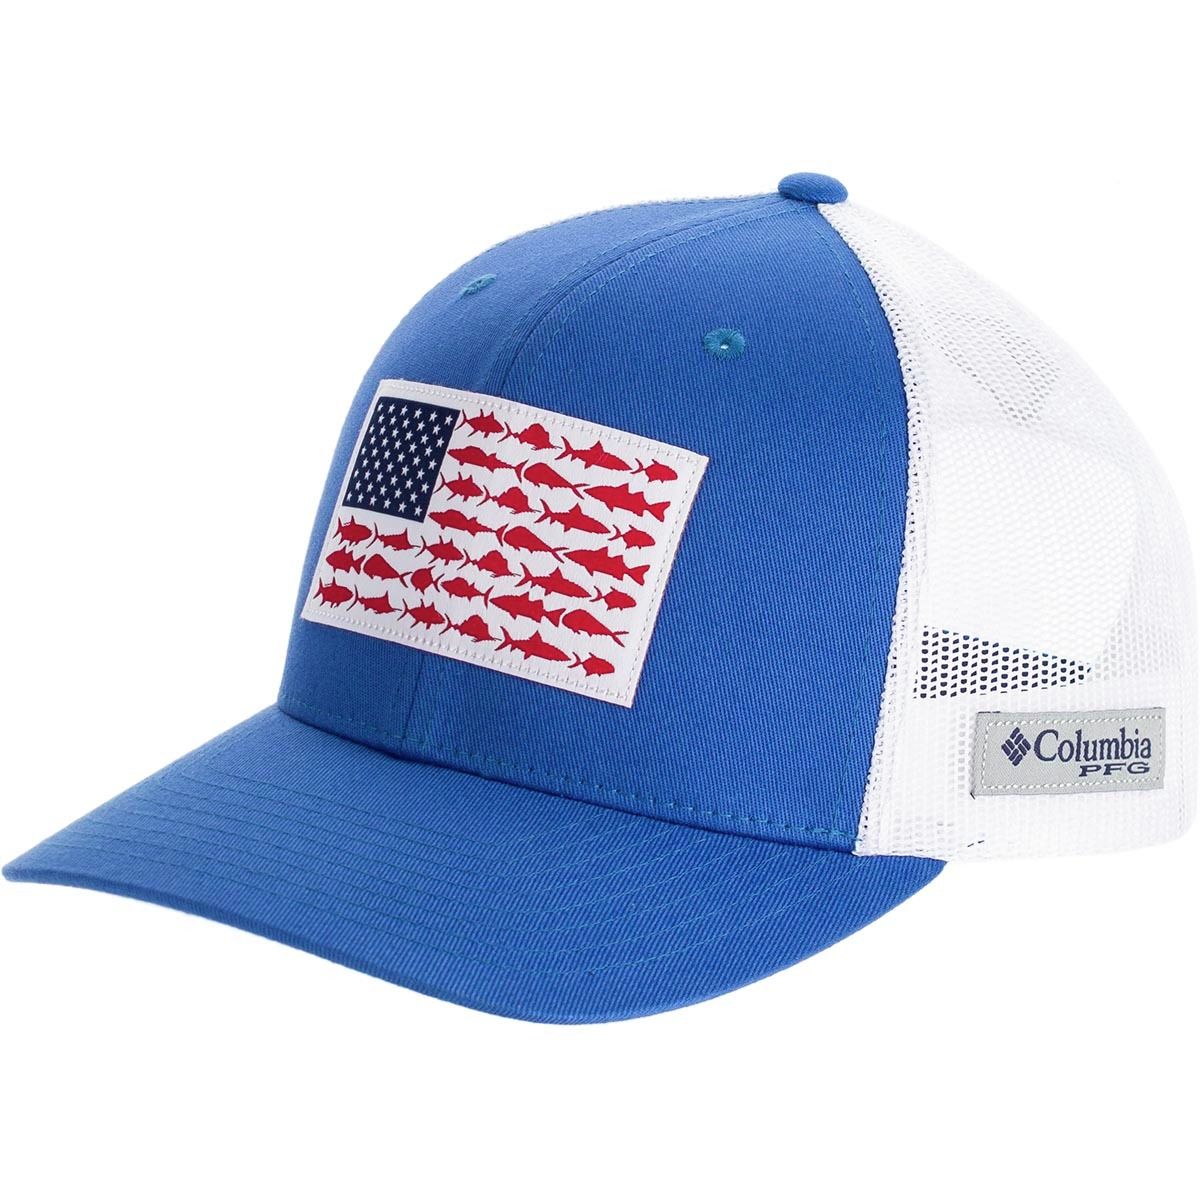 Columbia PFG Mesh Fish Flag Snap Back Trucker Hat